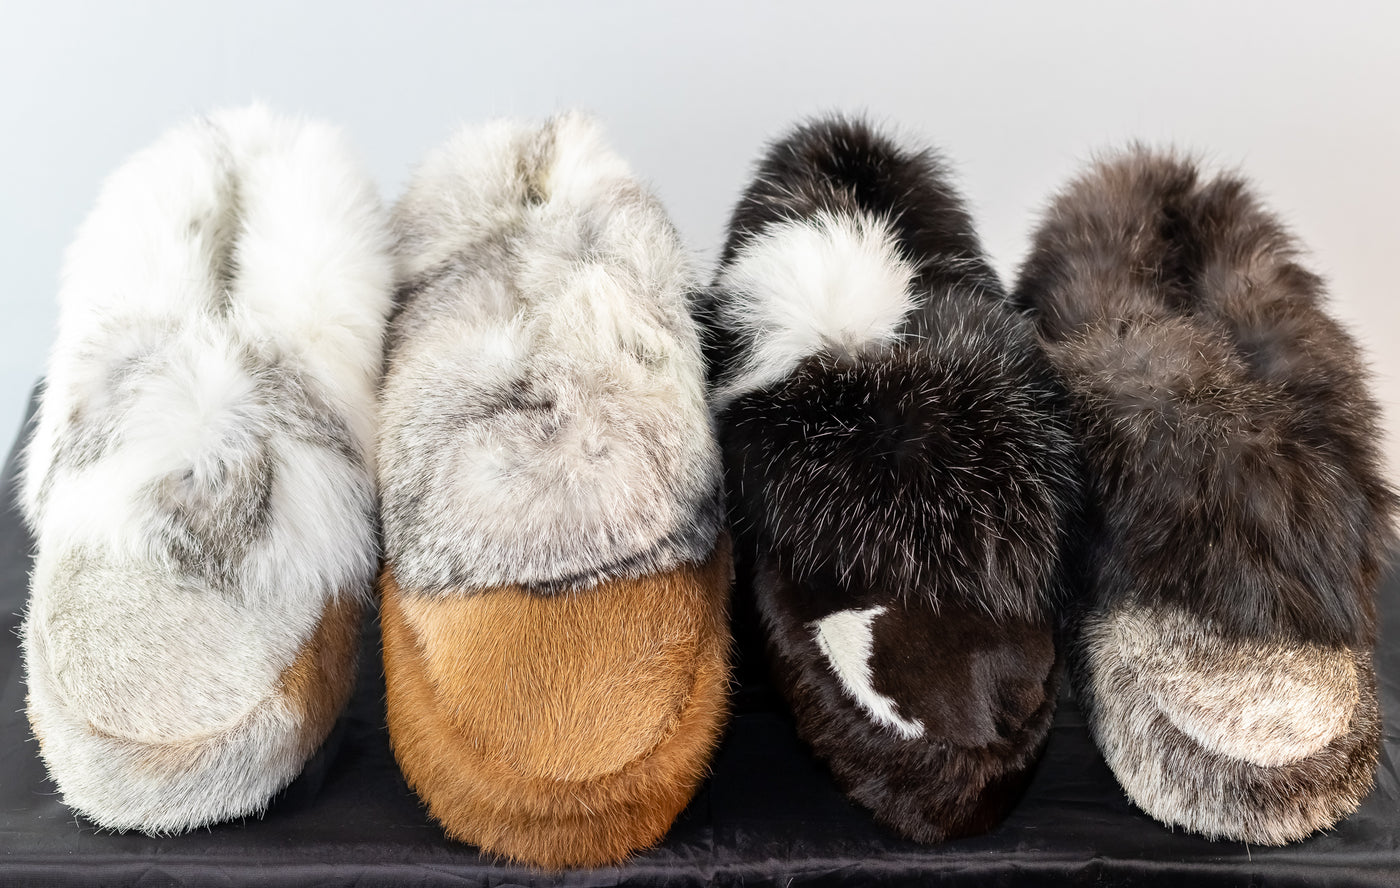 Assorted Handmade Calf Skin Slippers with Rabbit Fur Trim